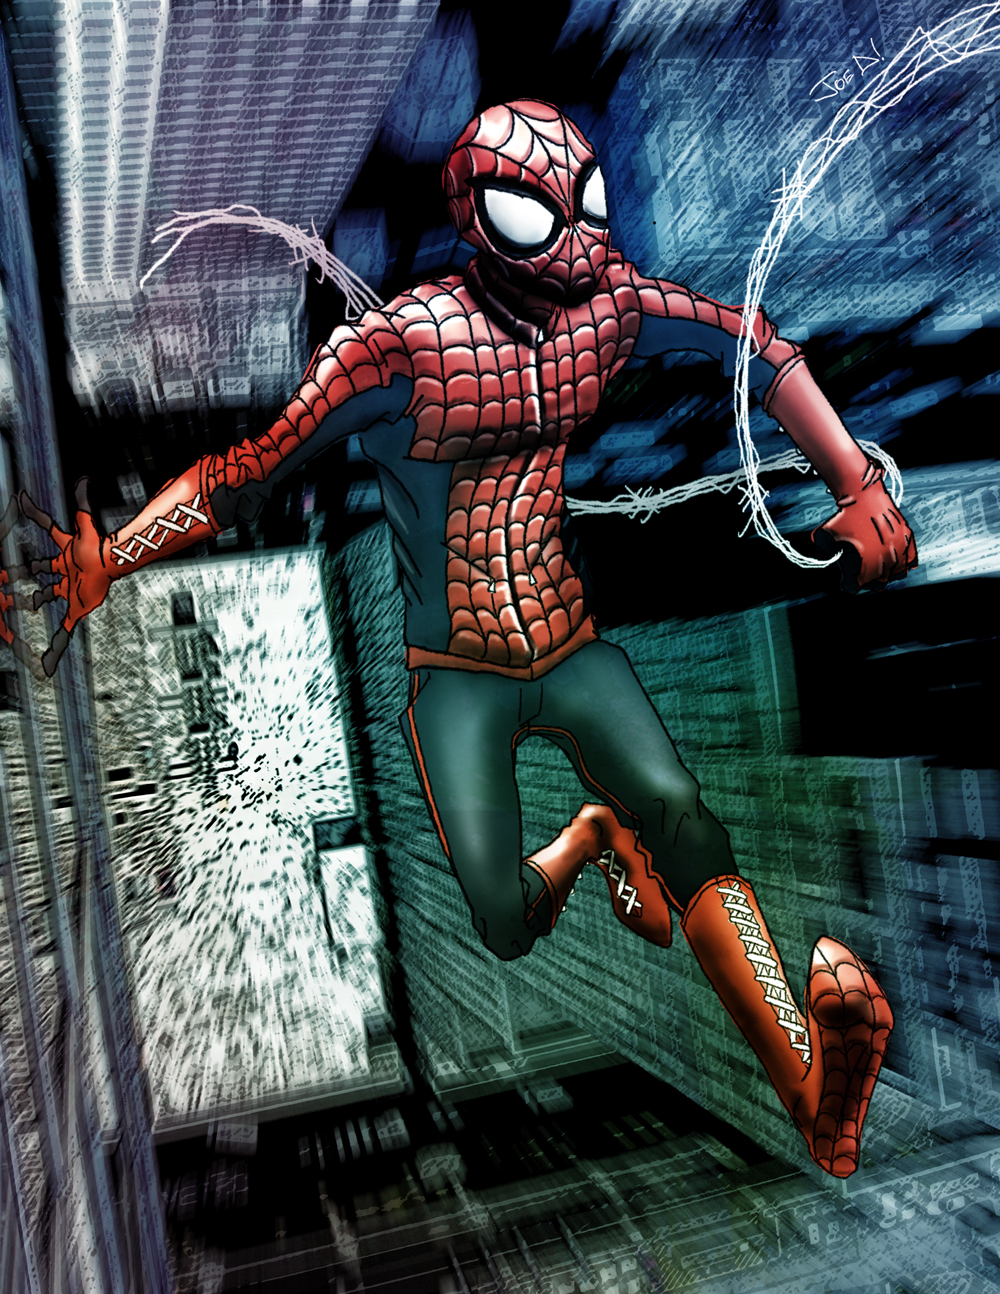 Sporty Spider-Man by Joe D!